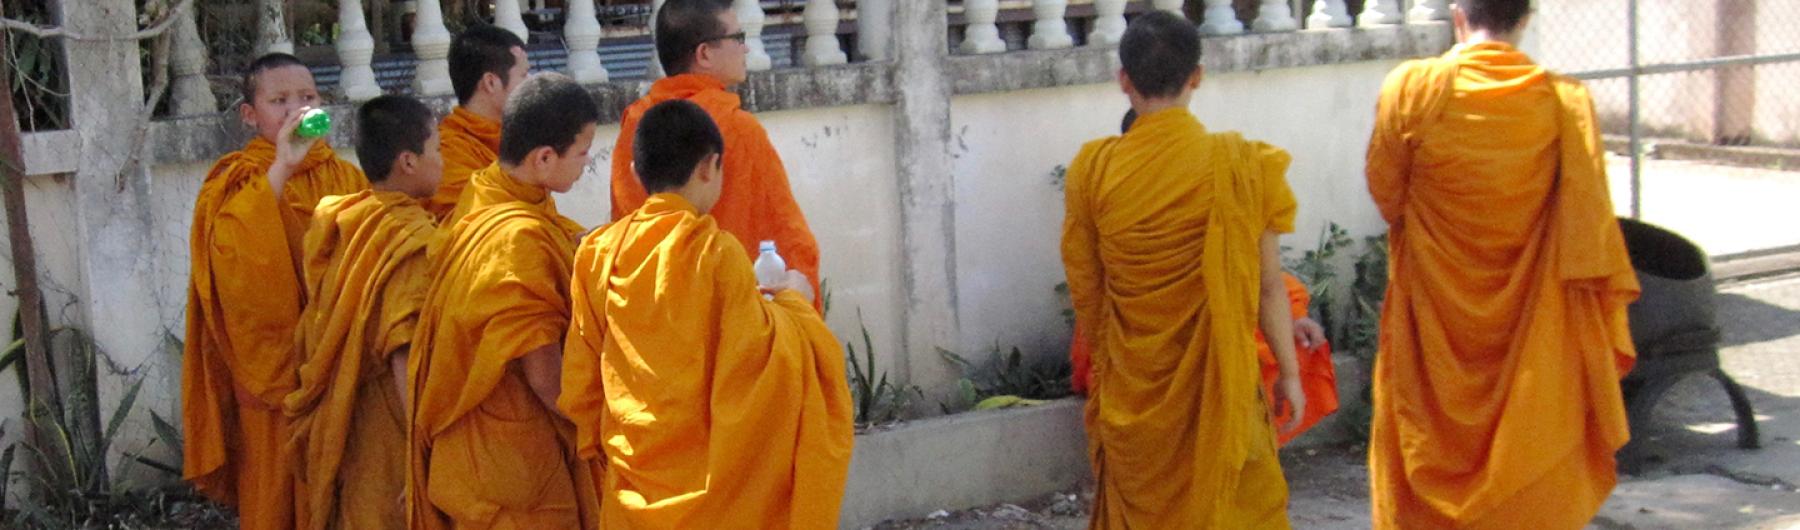 Monks in orange robes